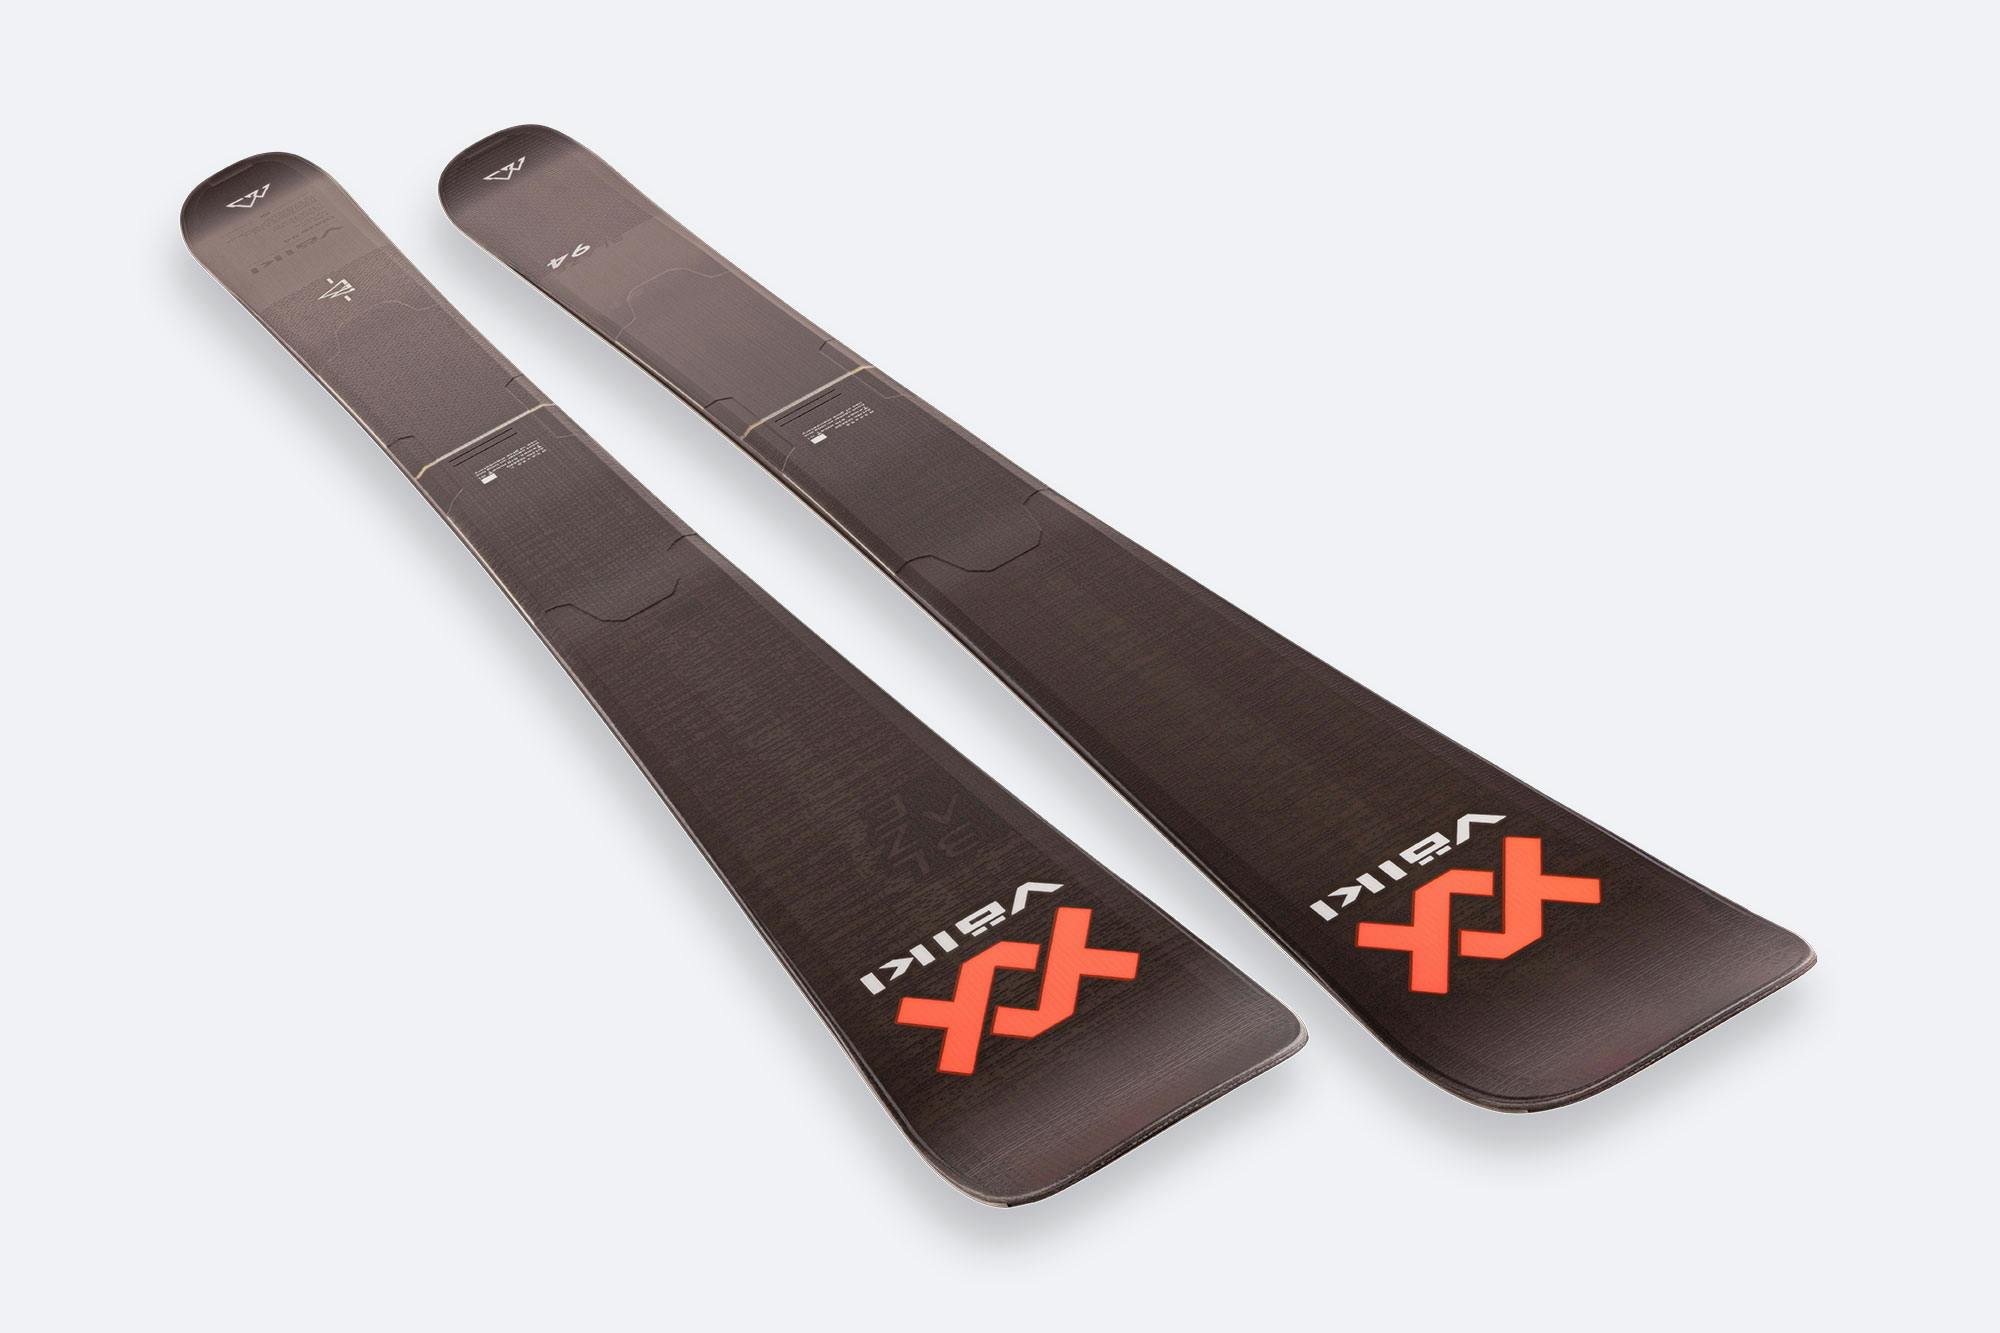 Volkl Blaze 94 Skis · 2023 · 186 cm